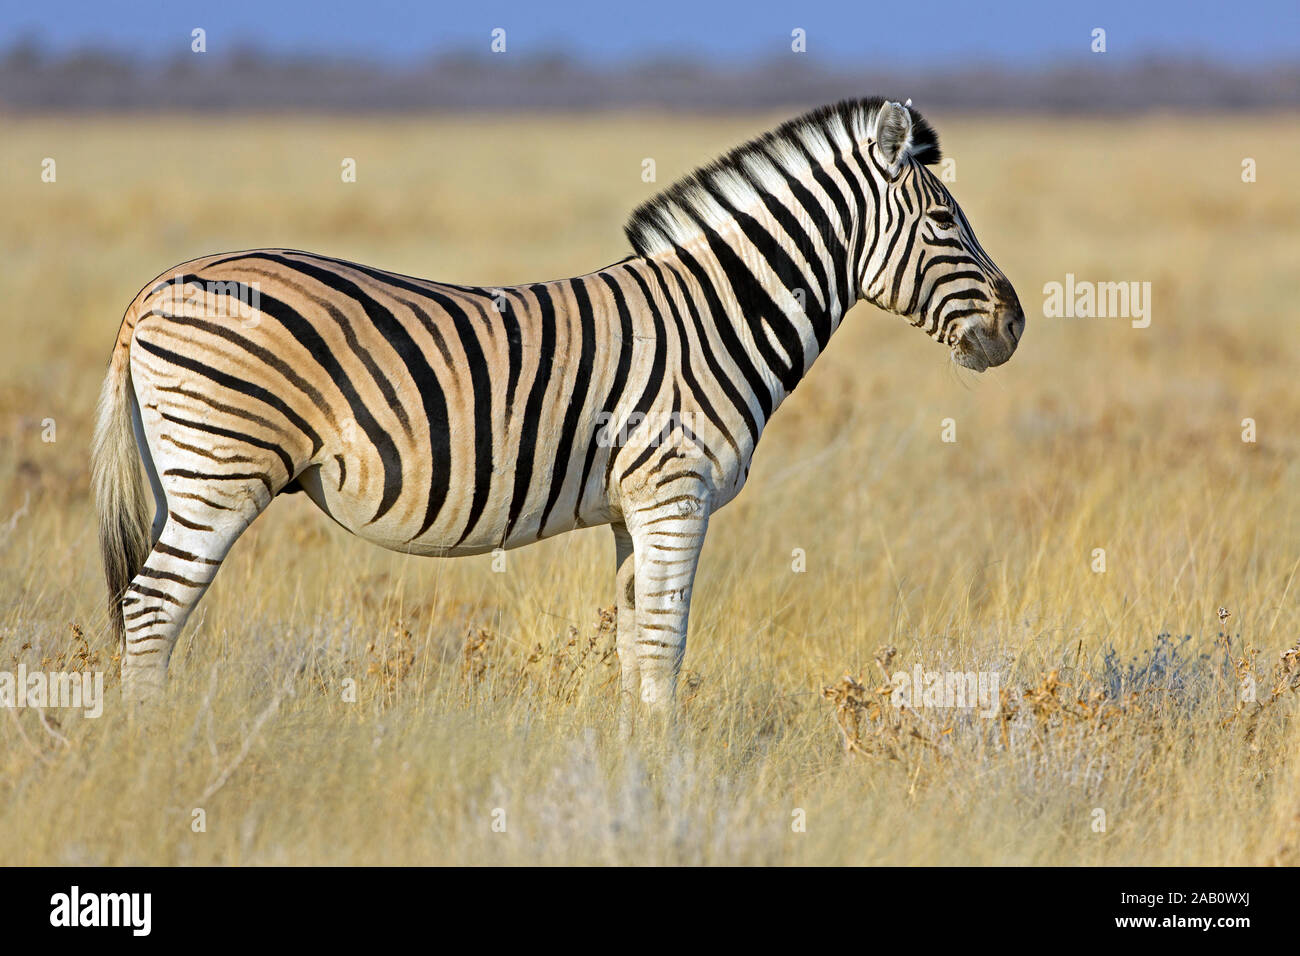 Steppenzebra, Pferdezebra, Equus quagga, llanuras, cebra Cebra común, Burchell zebra, cebra Cebra de llanura, de los llanos, la cebra de planicie, zèbre Foto de stock